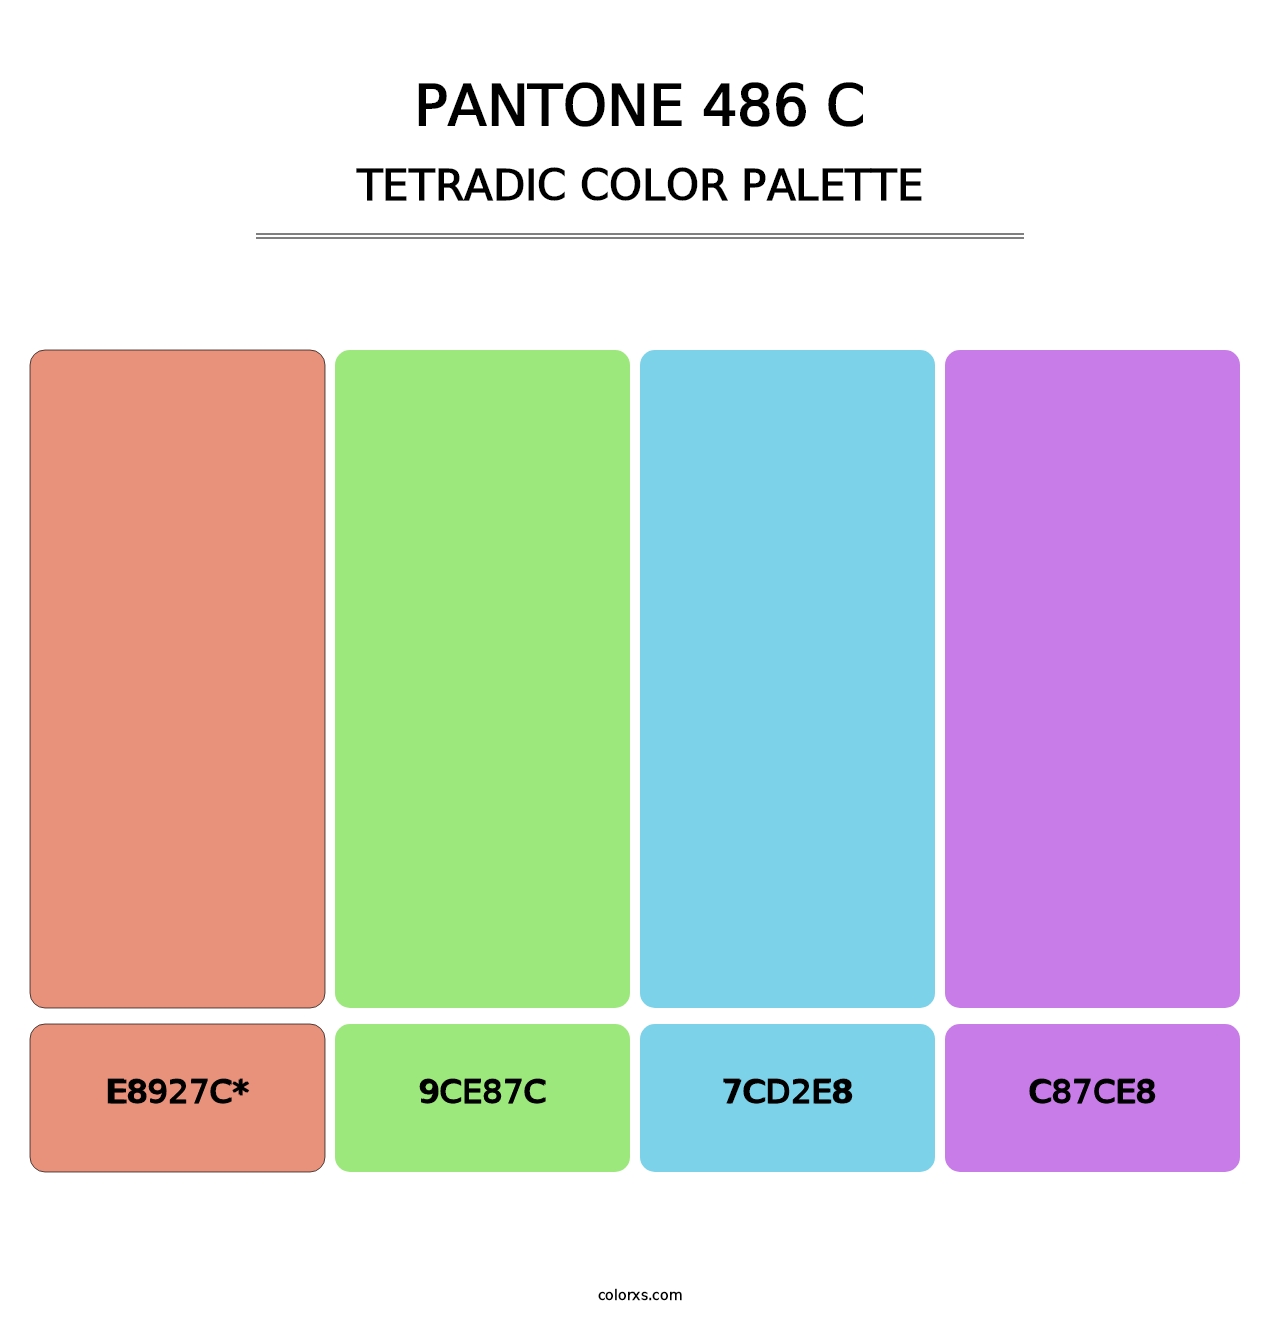 PANTONE 486 C - Tetradic Color Palette